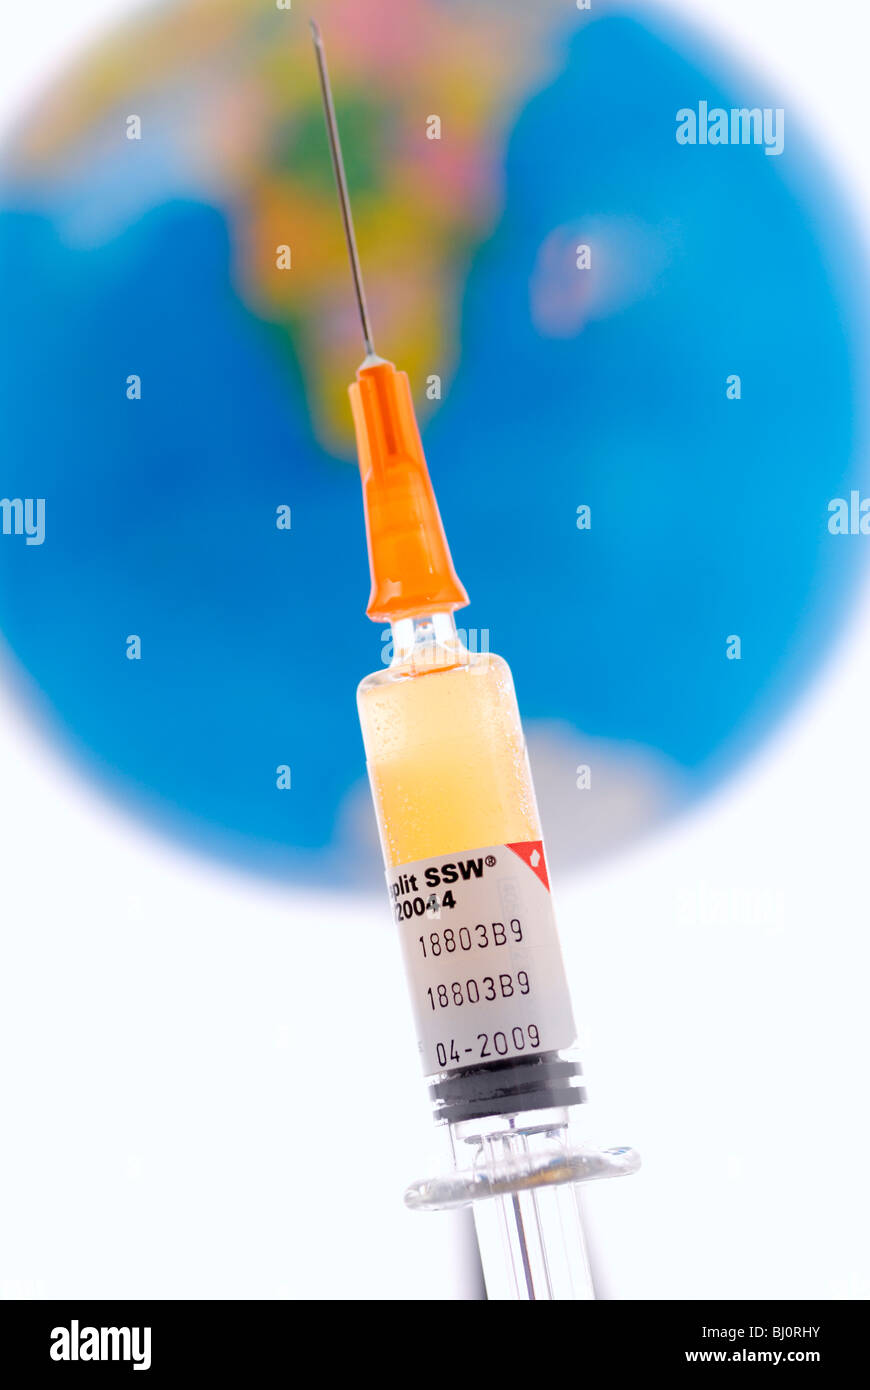 Syringe and globe, symbol photo vaccination against swine flu, pandemic Stock Photo